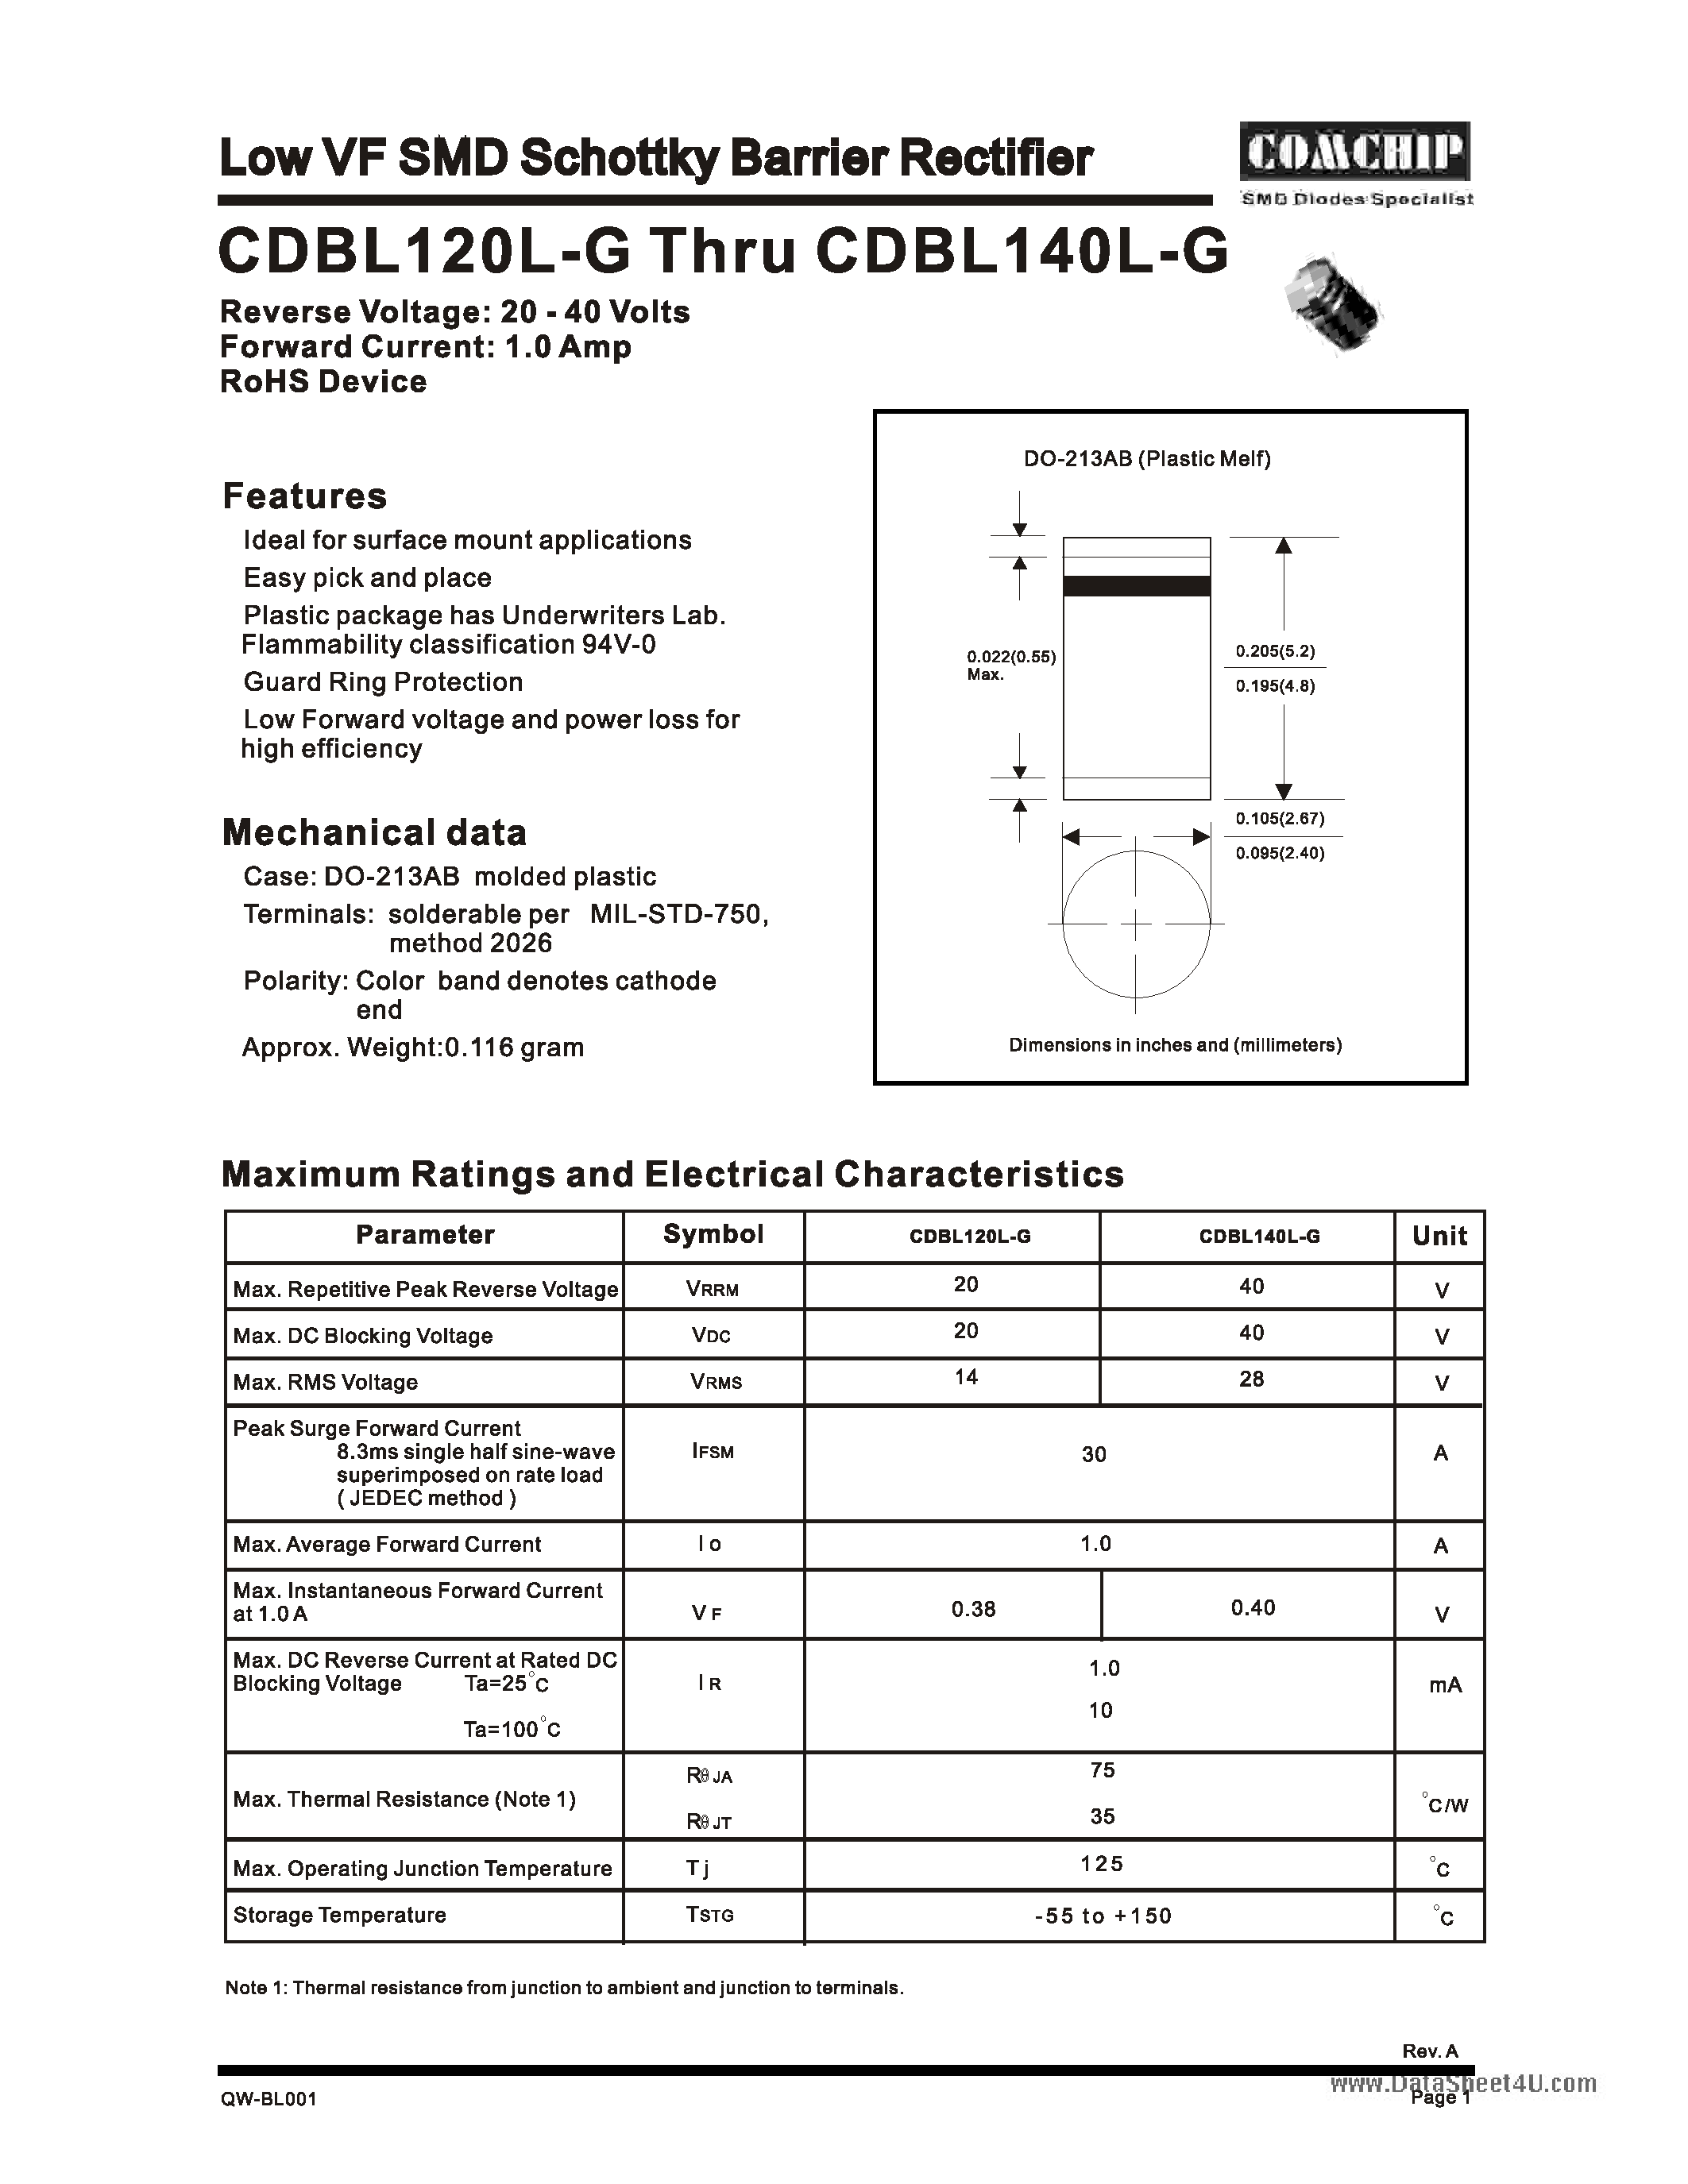 Datasheet CDBL120L-G - (CDBL120L-G / CDBL140L-G) Low VF SMD Schottky Barrier Rectifier page 1